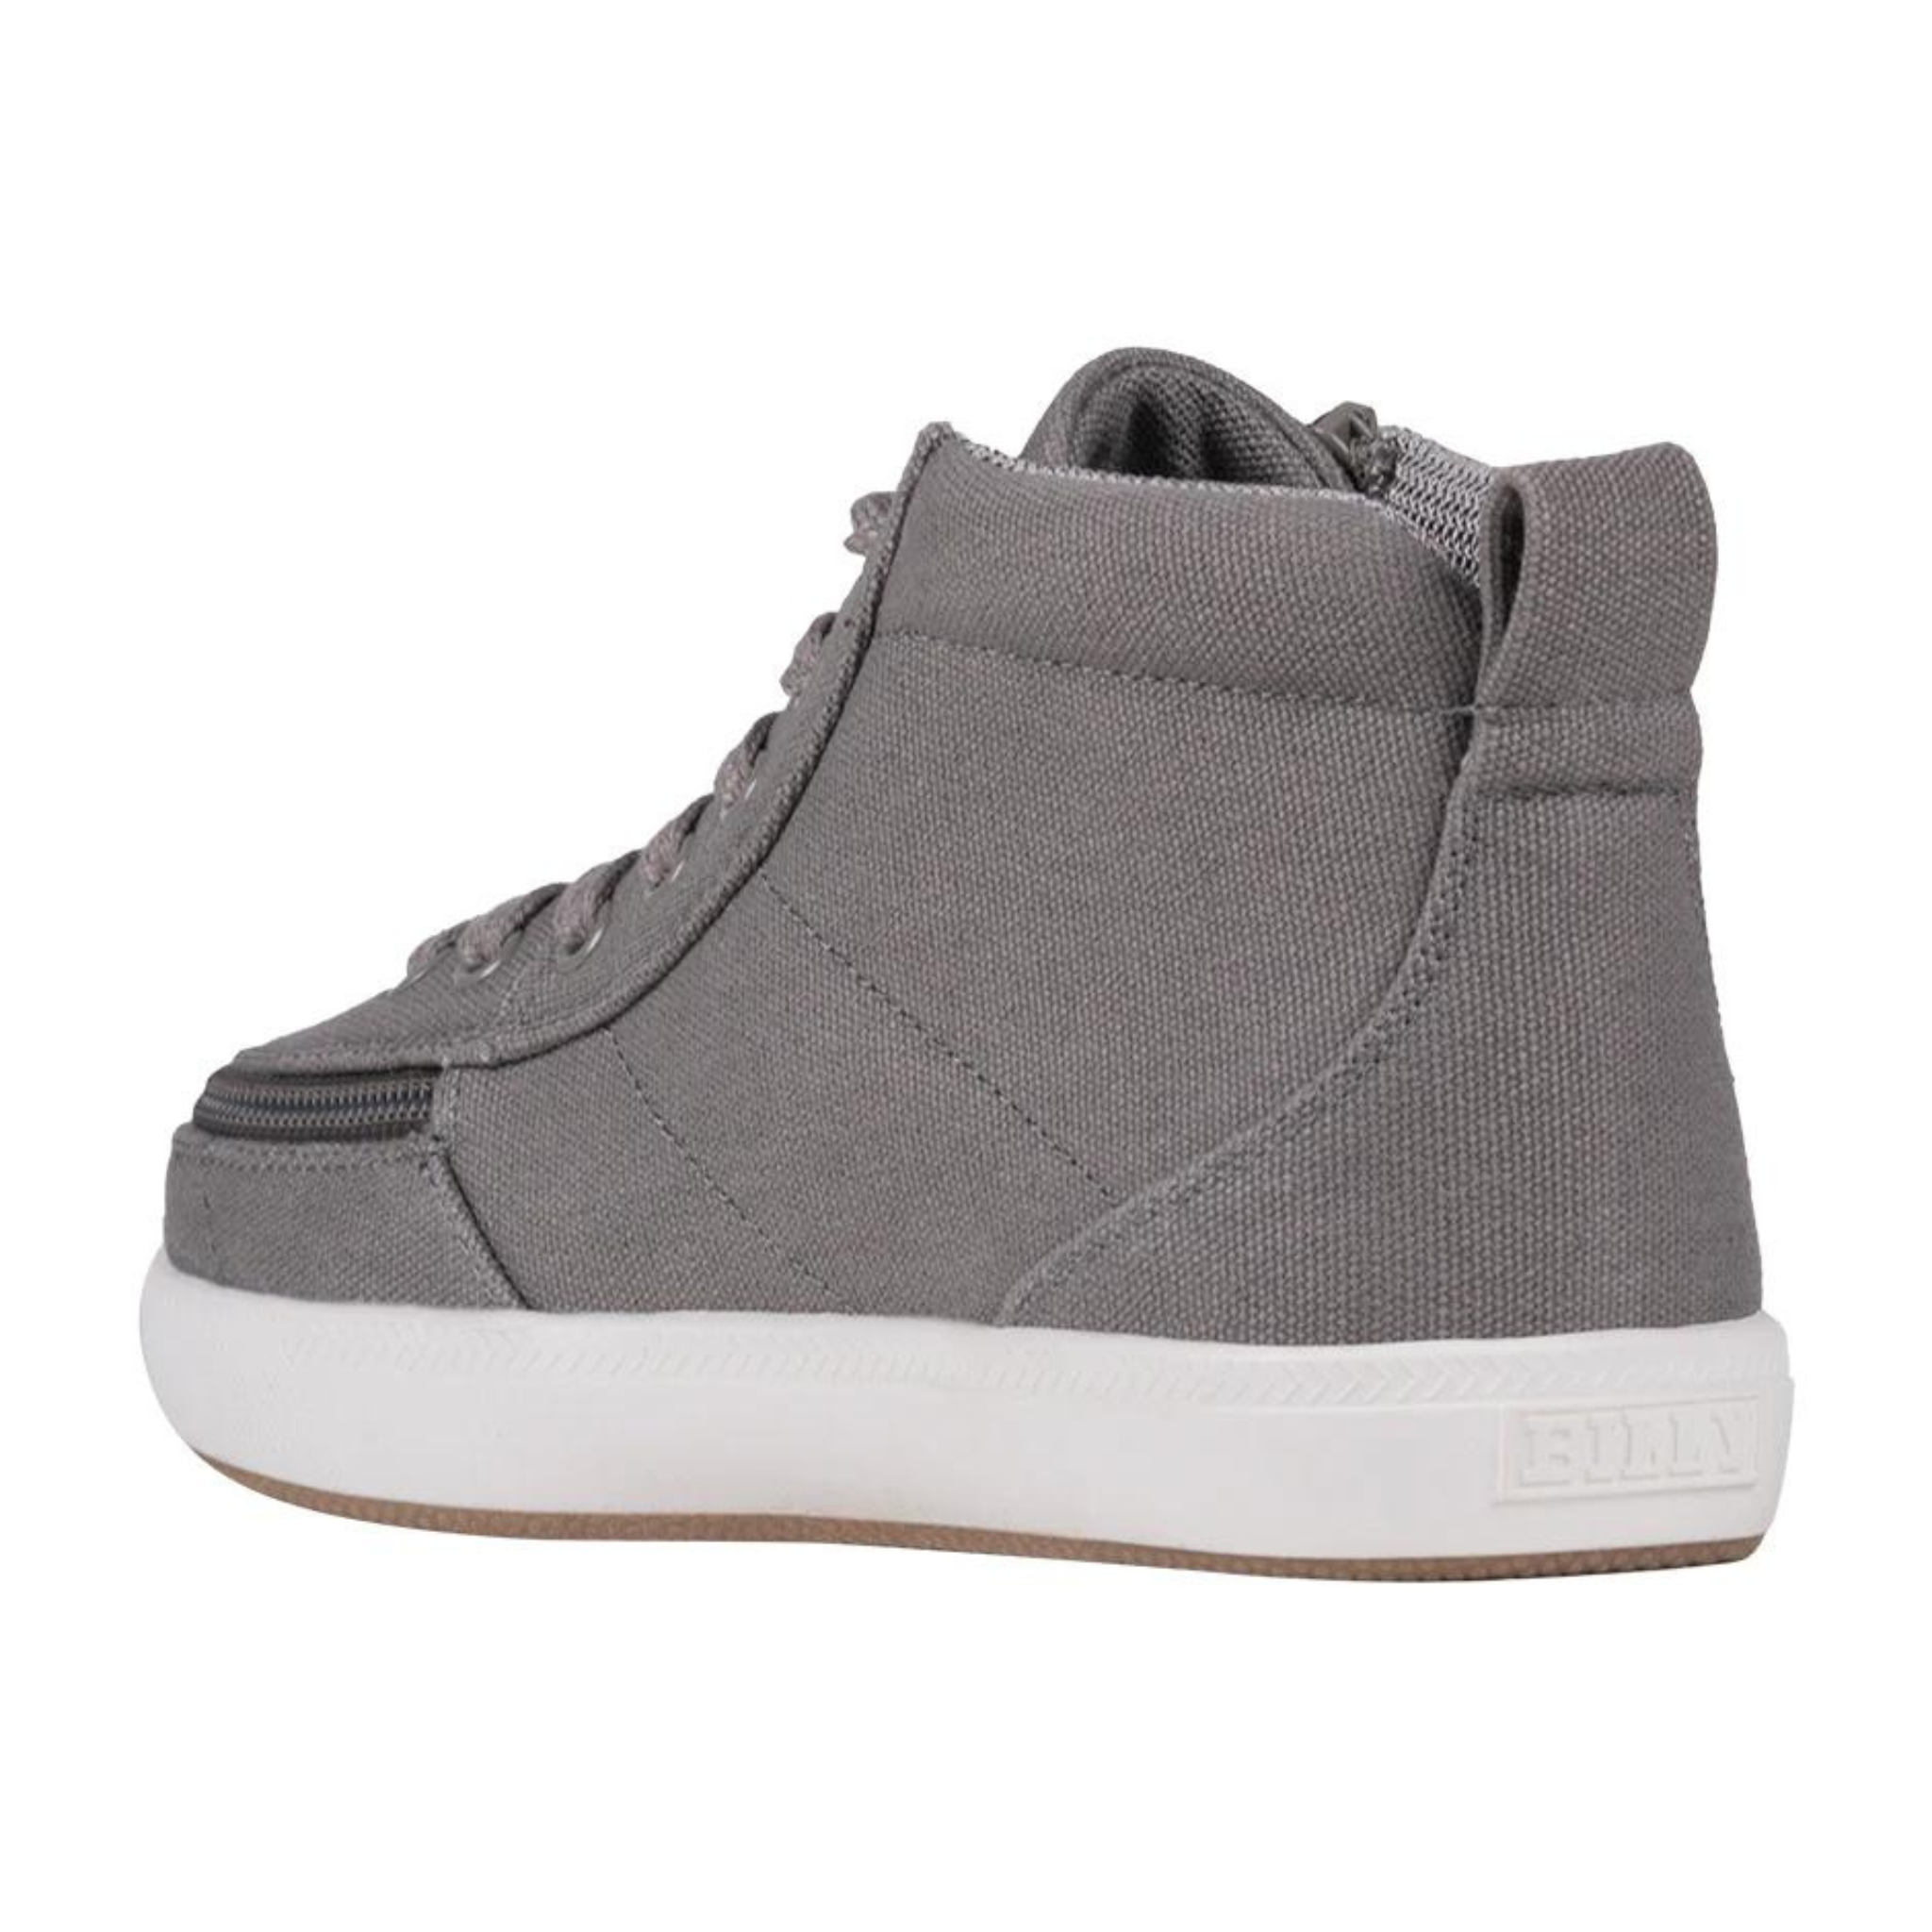 Billy Footwear (Kids) DR II Fit - High Top DR II Dark Grey Canvas Shoes